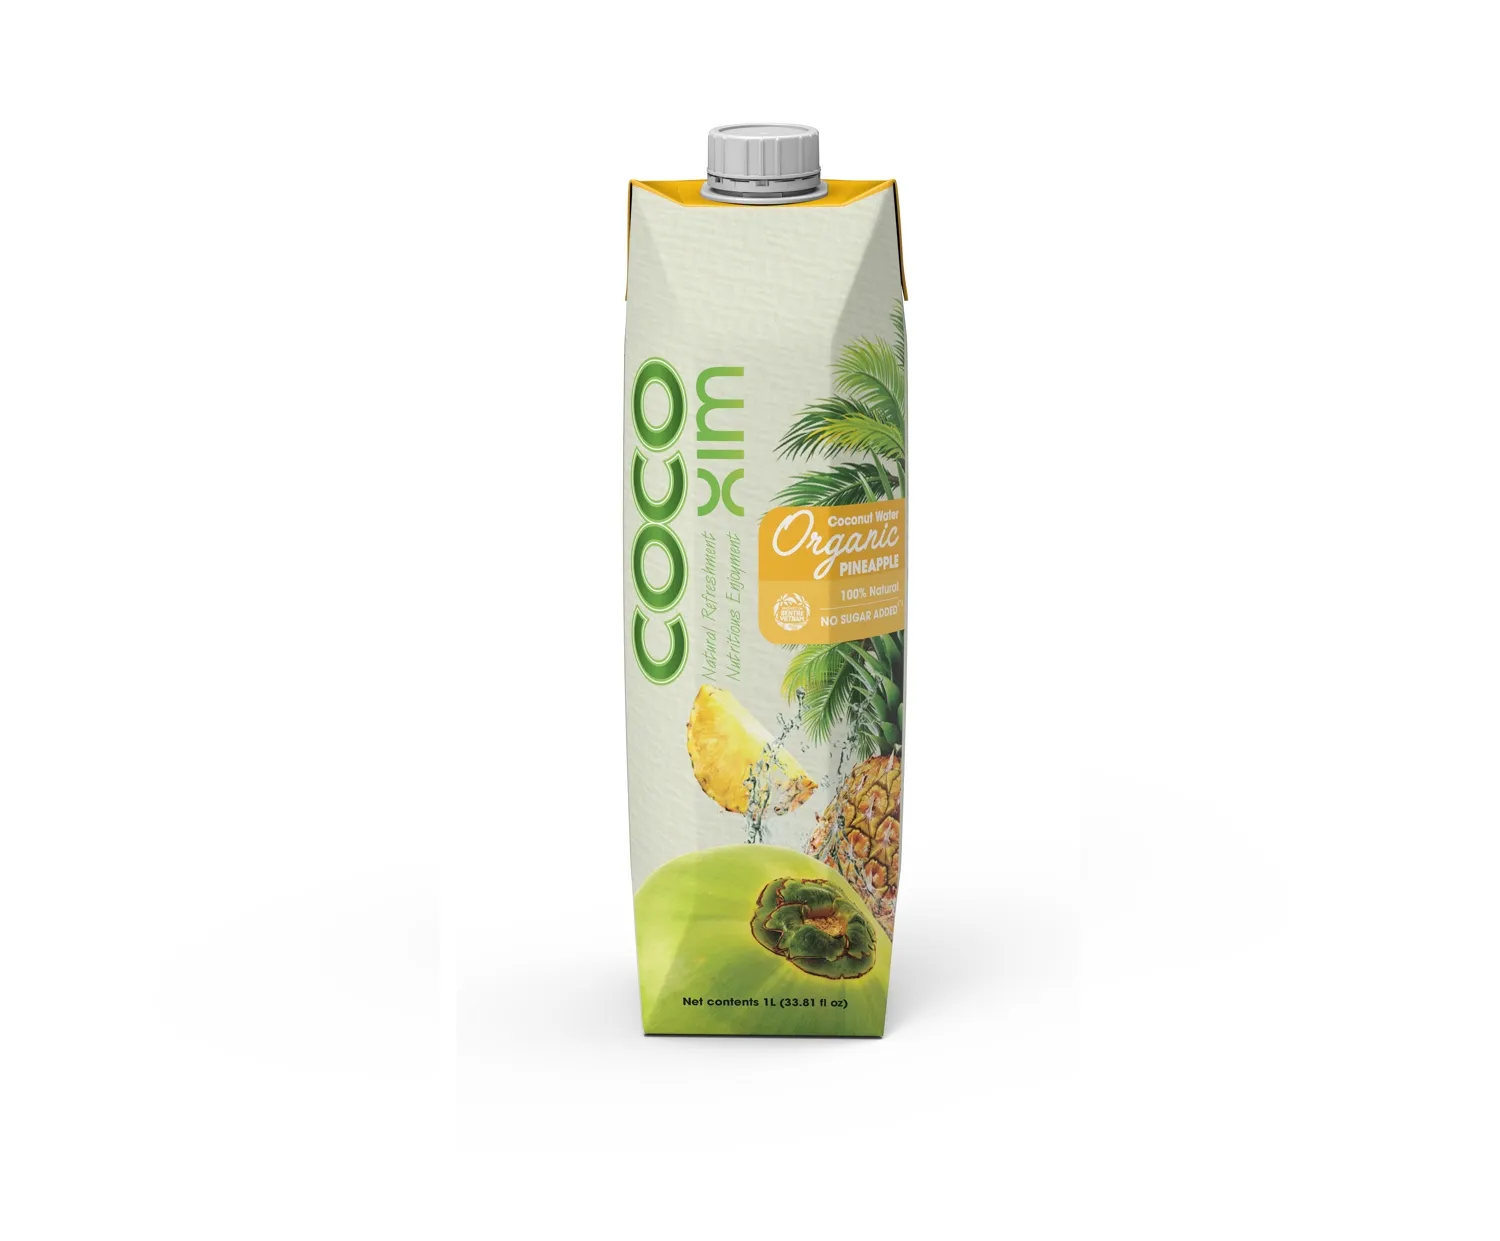 Fruit & Vegetable Juice Cocoxim 1000ml bulk box organic coconut organic drink coconut water with orange flavor